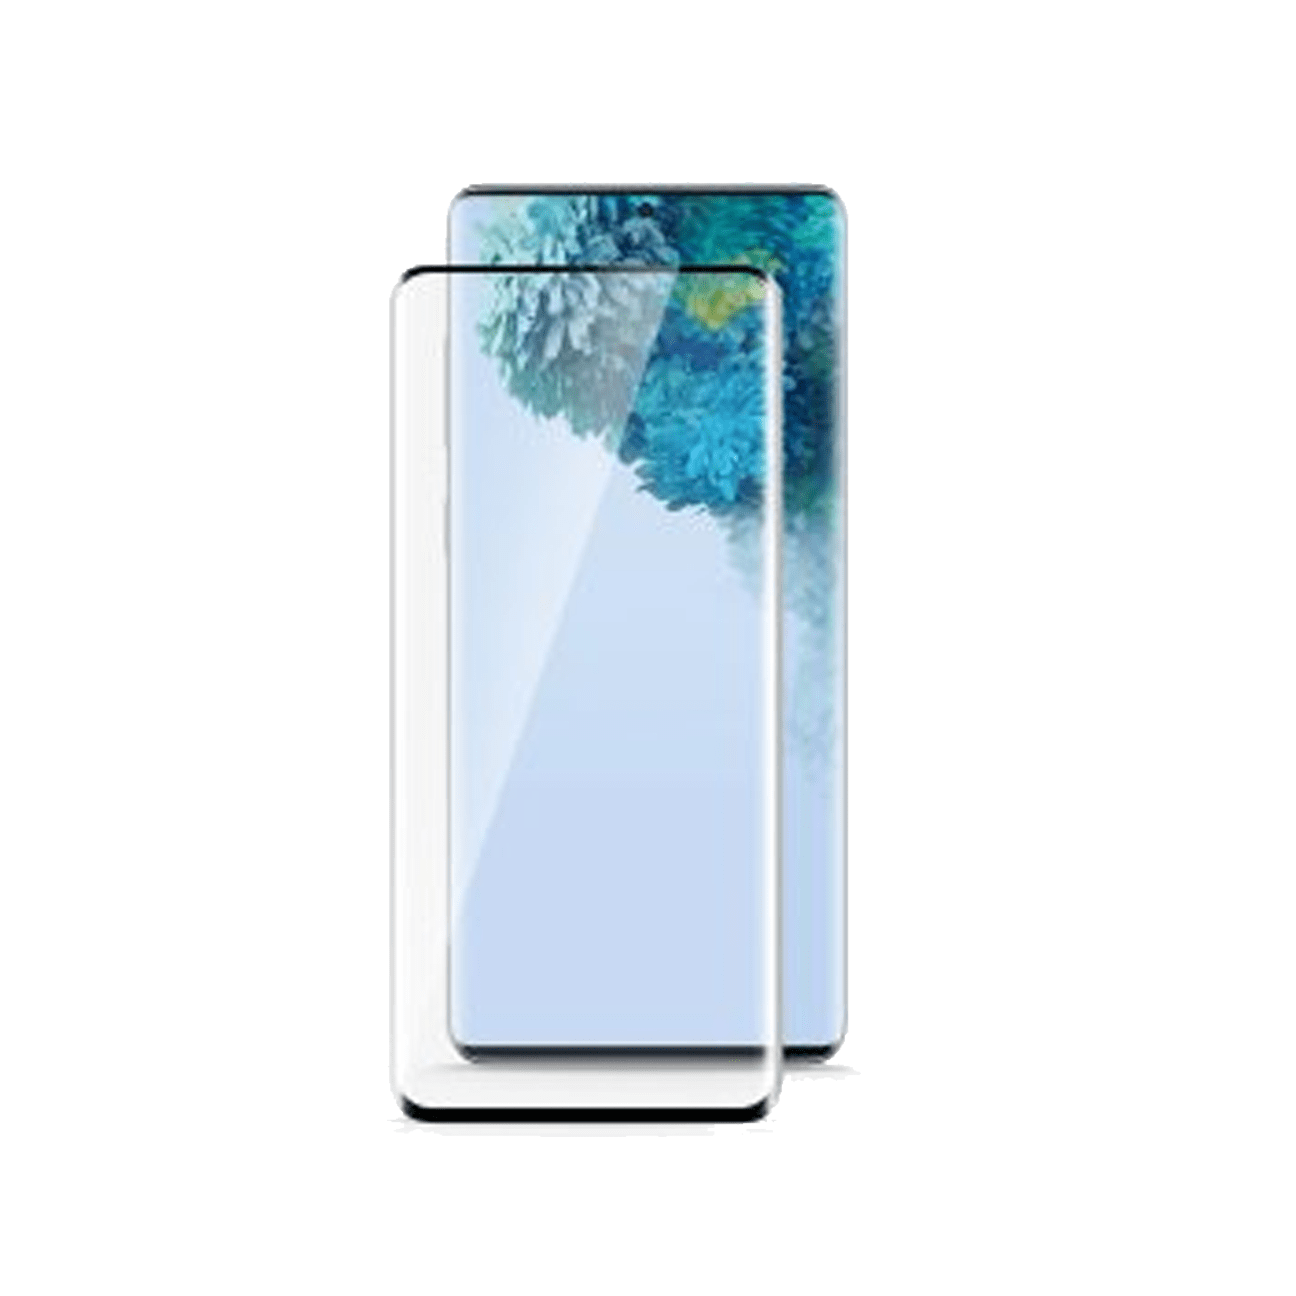 Samsung Galaxy S20 Plus 11D Mobile Glass